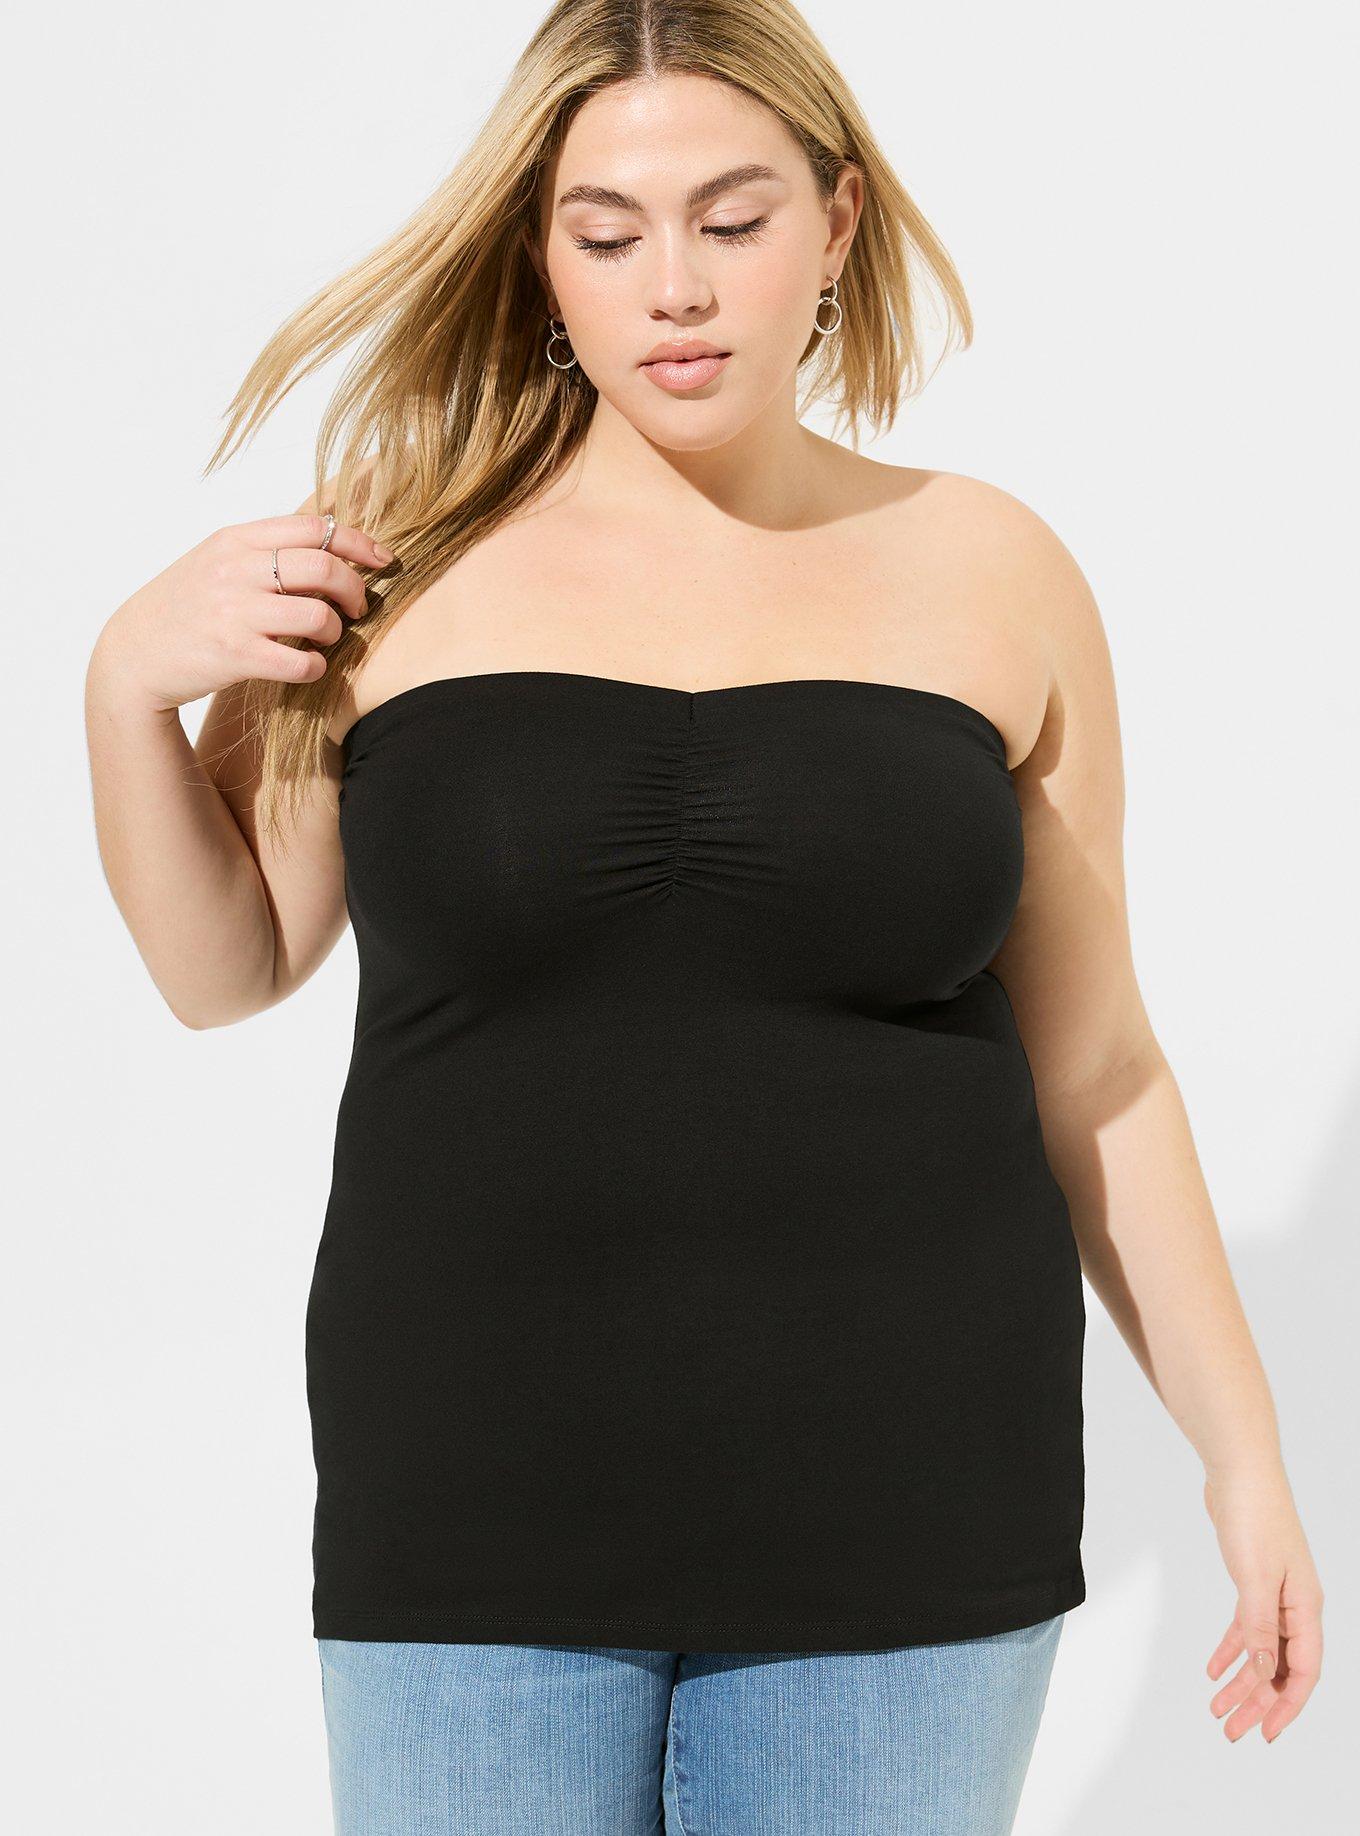 Best Deal for Graduation Dress Women's Fat Plus Size Loose